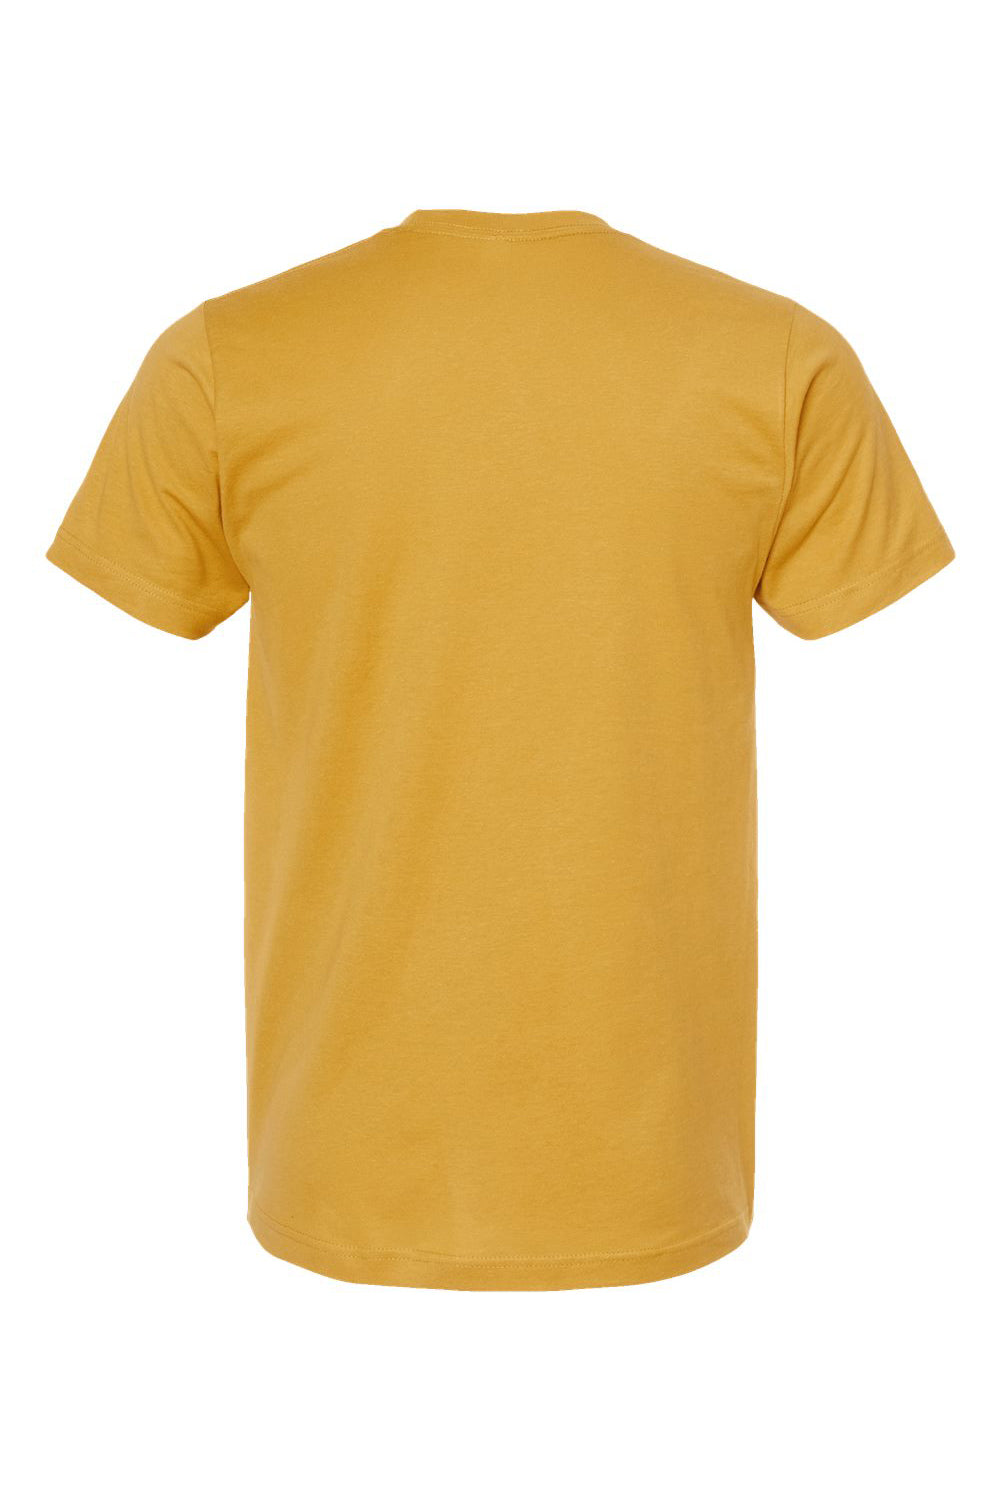 Tultex 202 Mens Fine Jersey Short Sleeve Crewneck T-Shirt Ginger Gold Flat Back